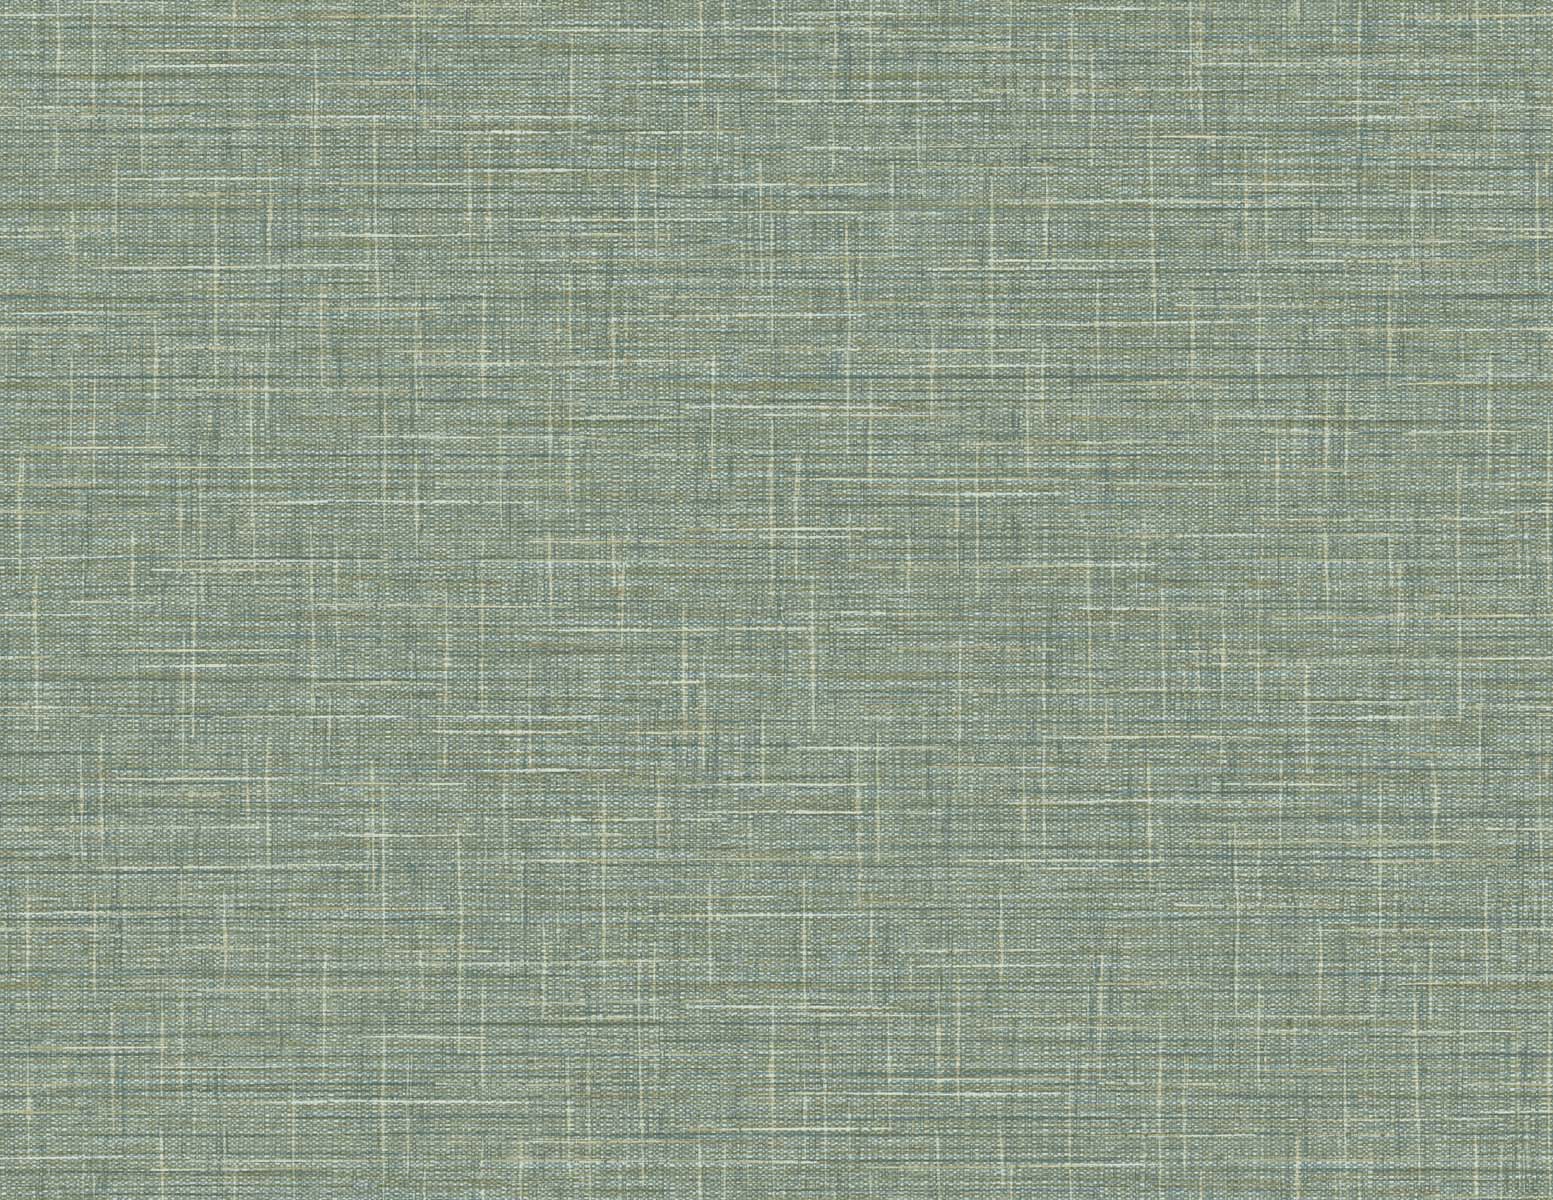 DuPont TG60113 Tedlar Textures Grasmere Weave Embossed Vinyl  Wallpaper Moss Bed